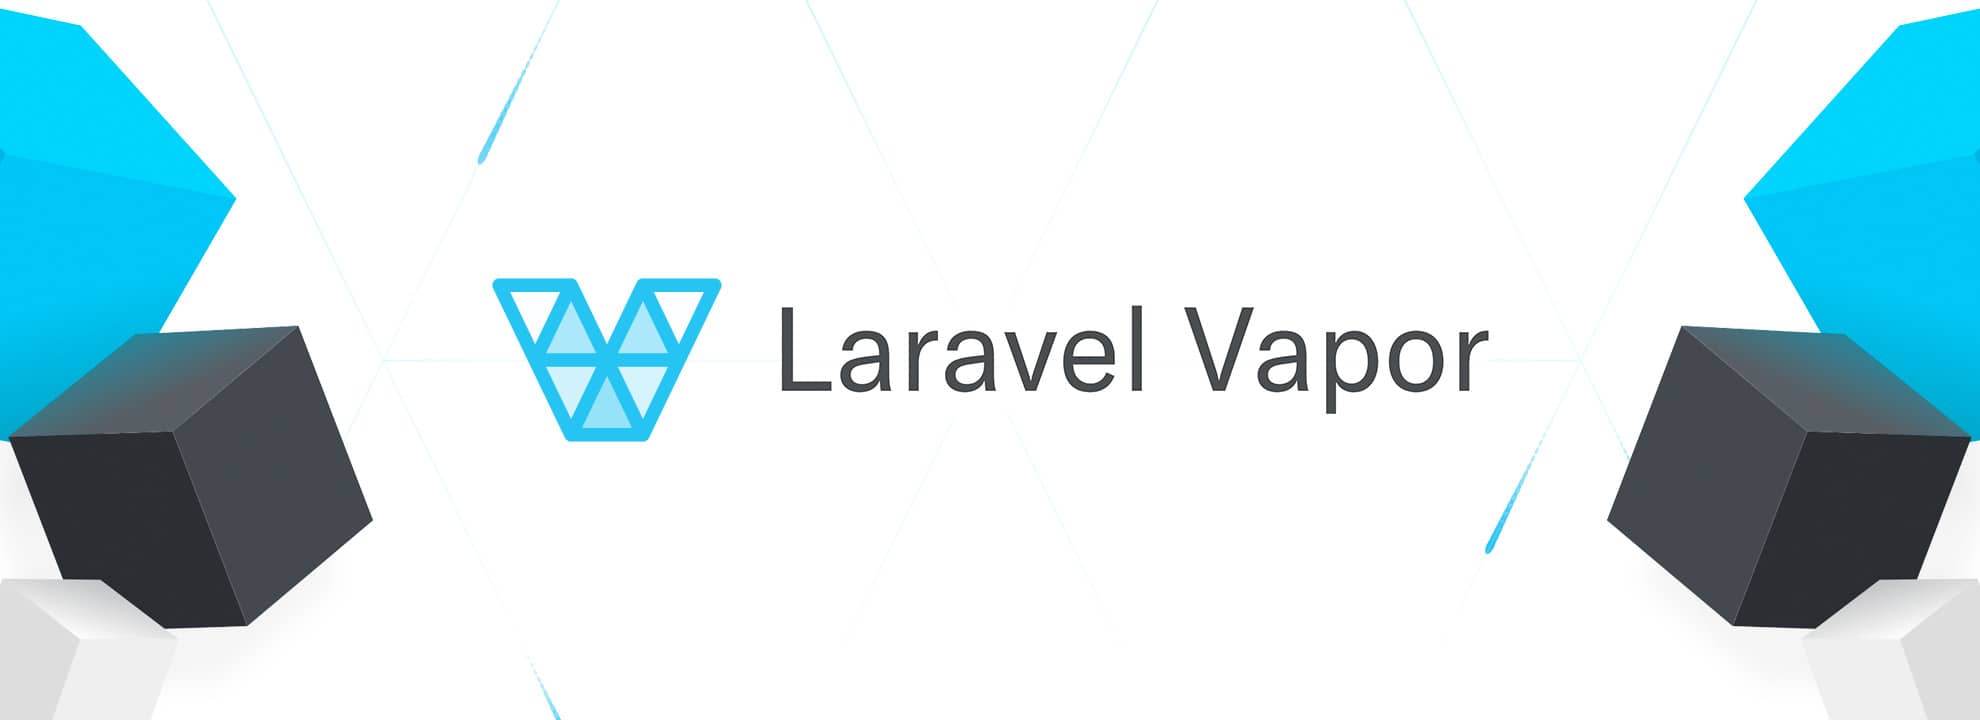 Laravel Vapor - the serverless deployment platform